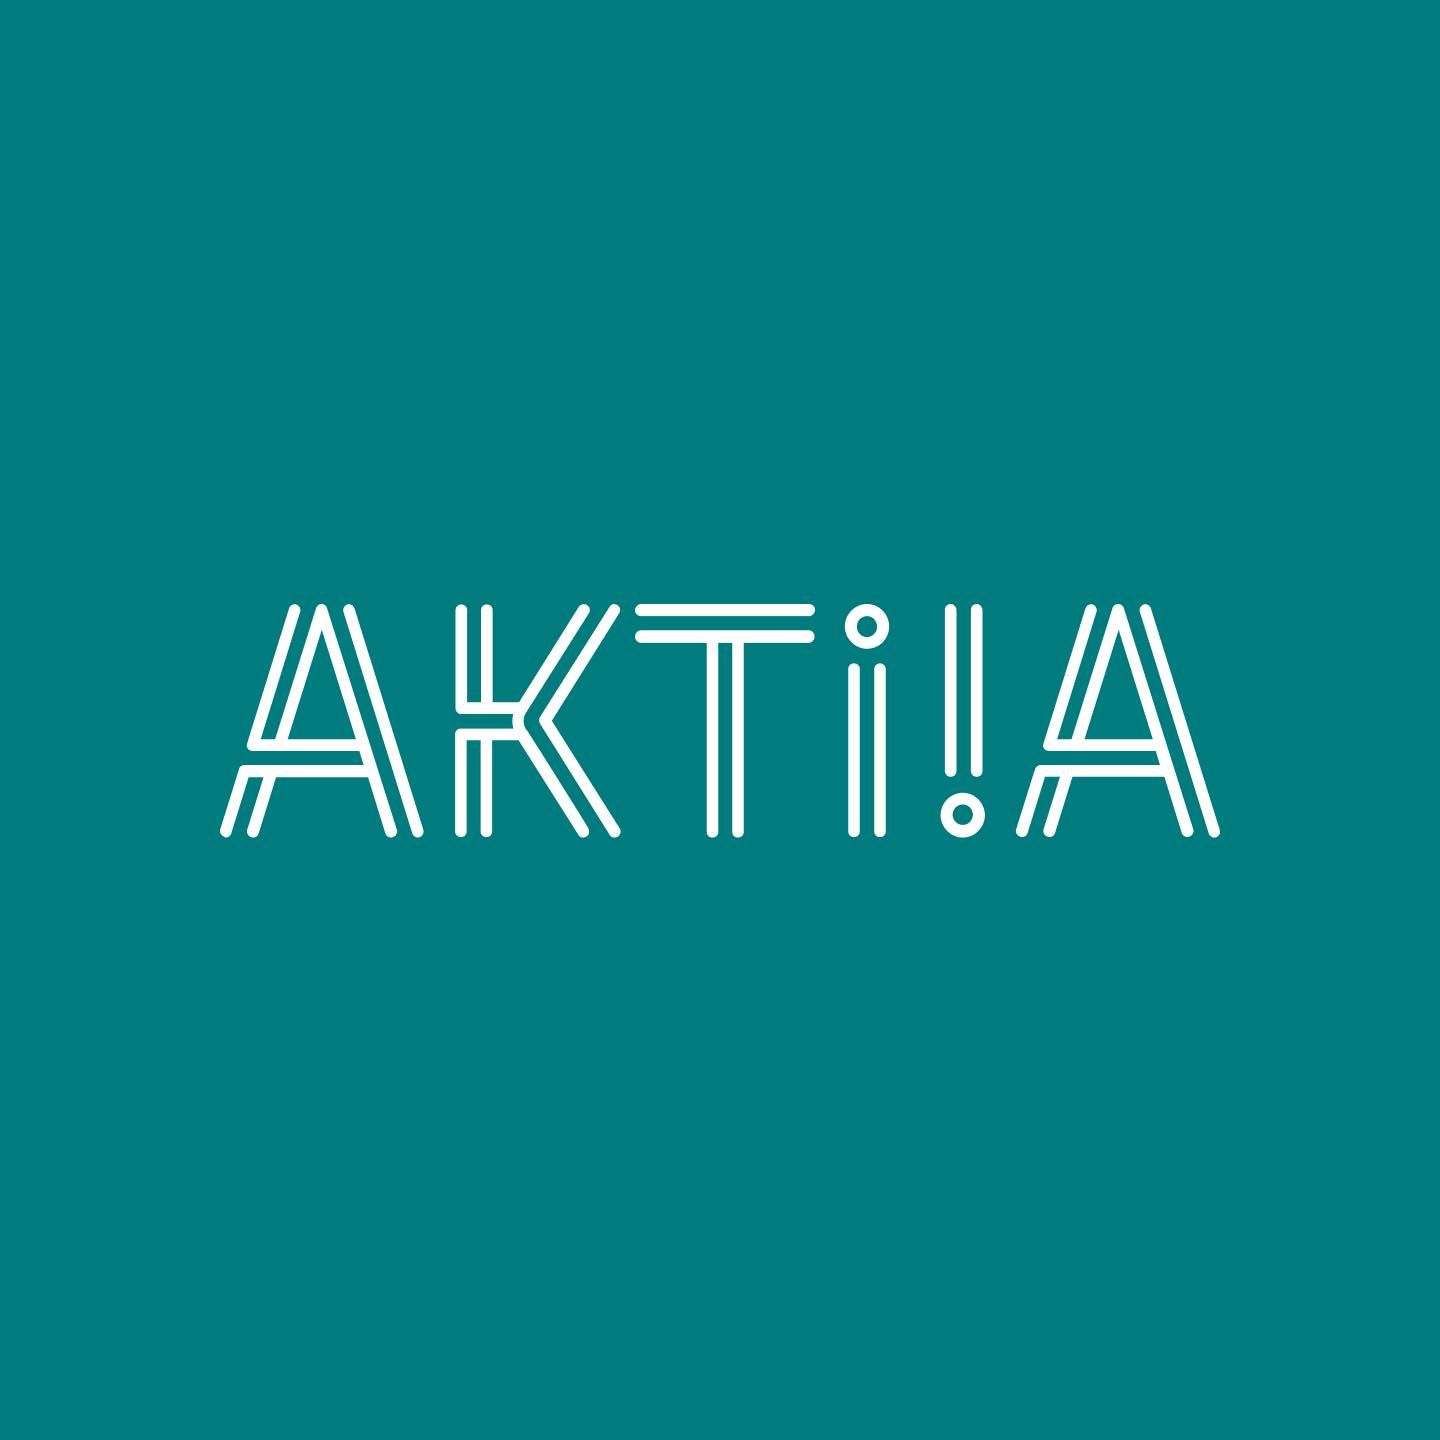 Aktiia Raises $30 Million in Investment Round